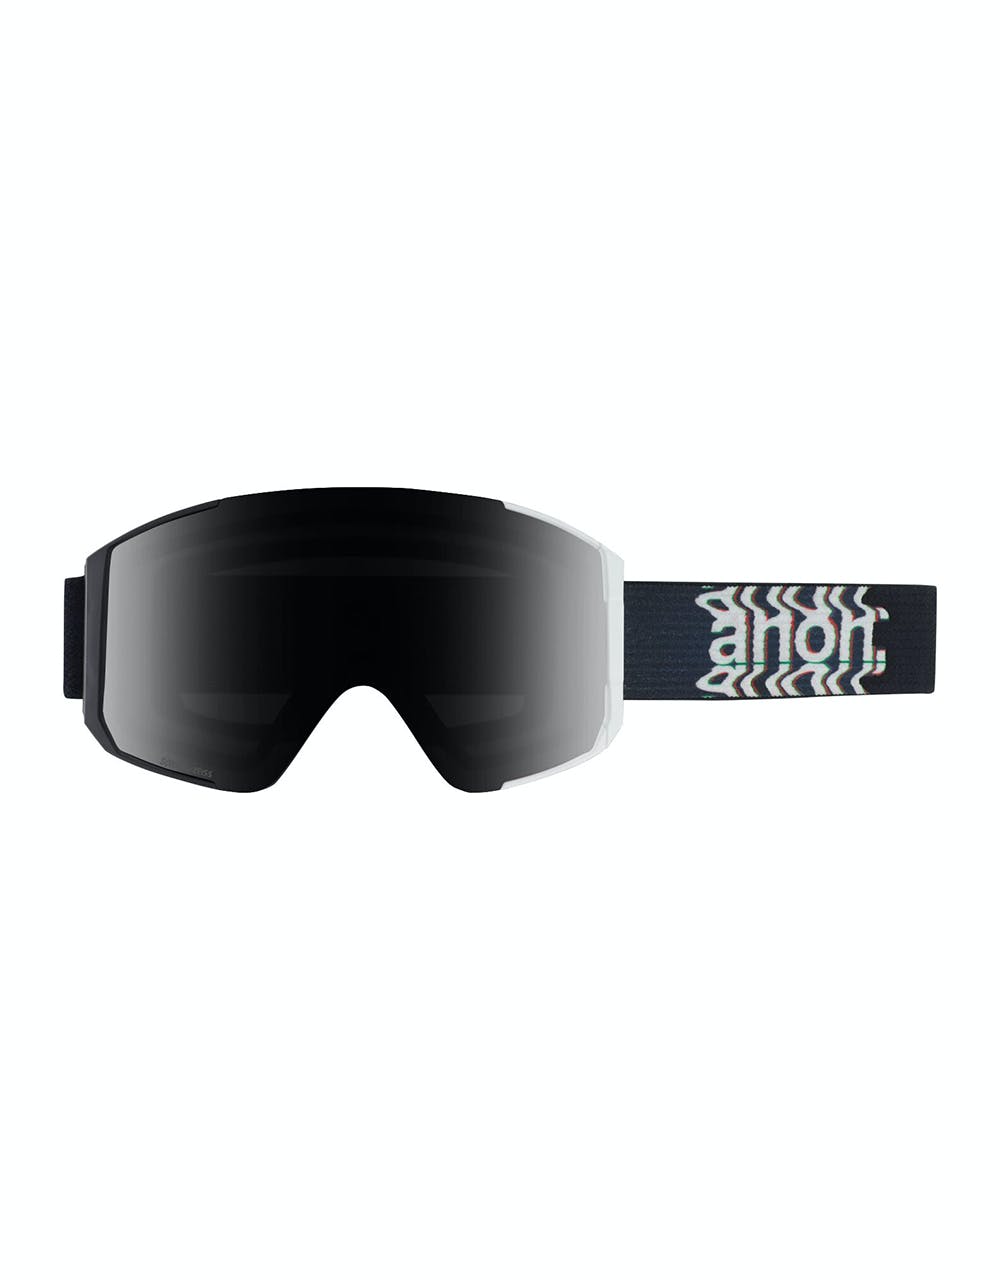 Anon Sync Snowboard Goggles - Trip/Sonar Smoke